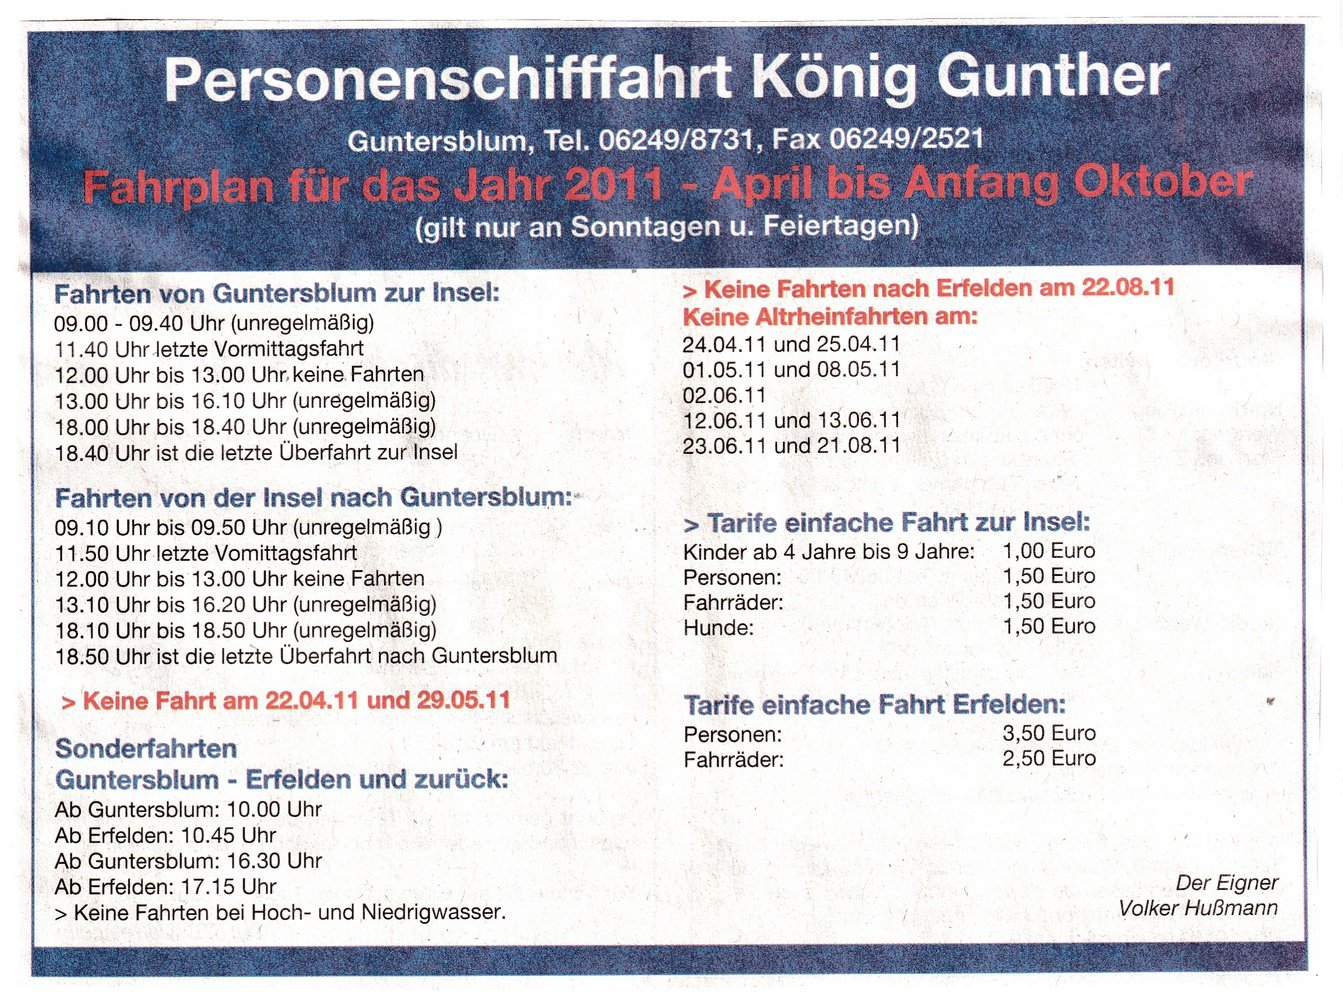 Personenboot "König Gunther" (Kulturverein Guntersblum CC BY-NC-SA)